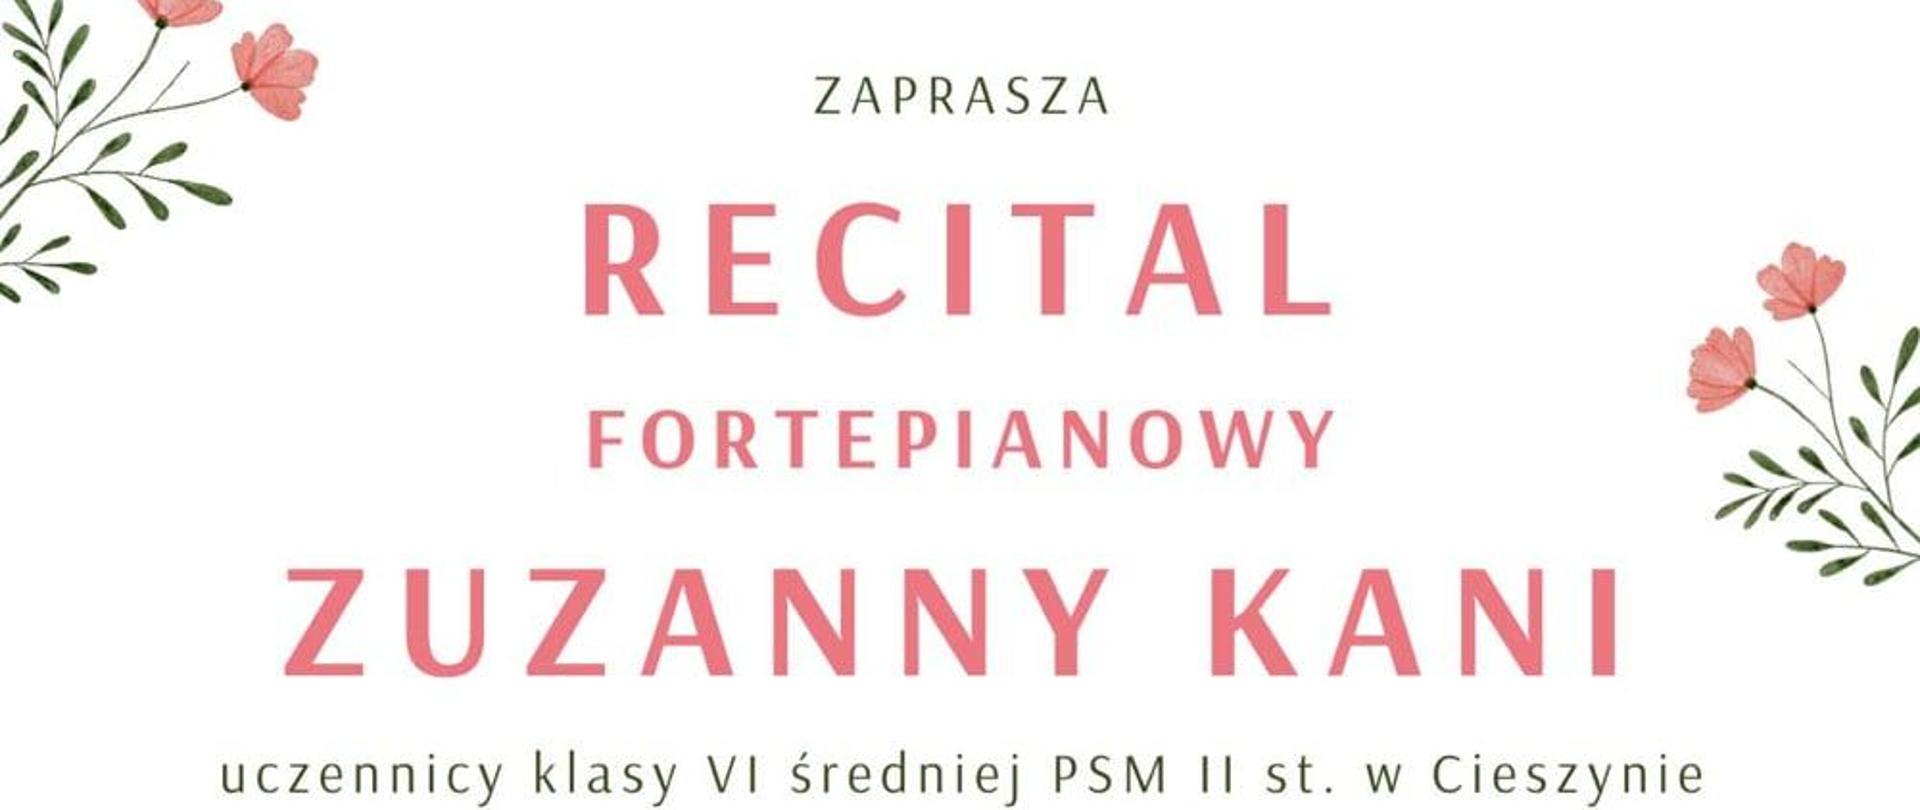 PLAKAT - Recital fortepianowy Zuzanny Kani